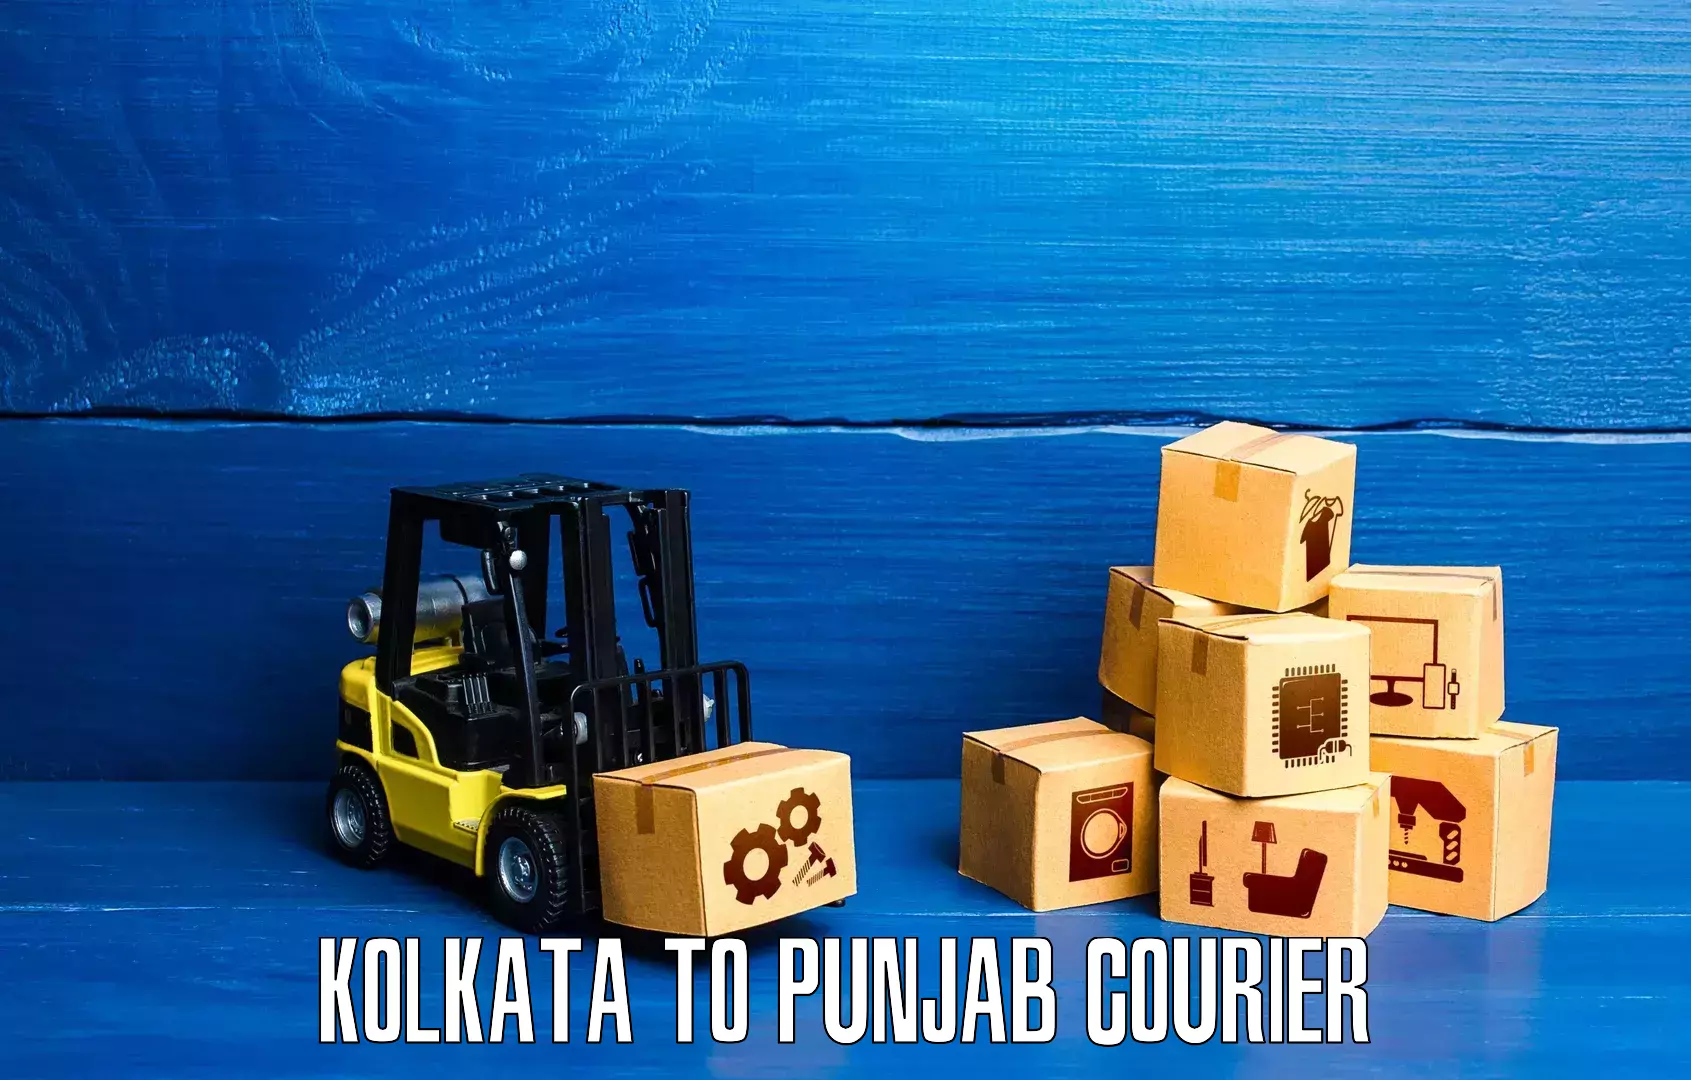 24/7 courier service Kolkata to Malout